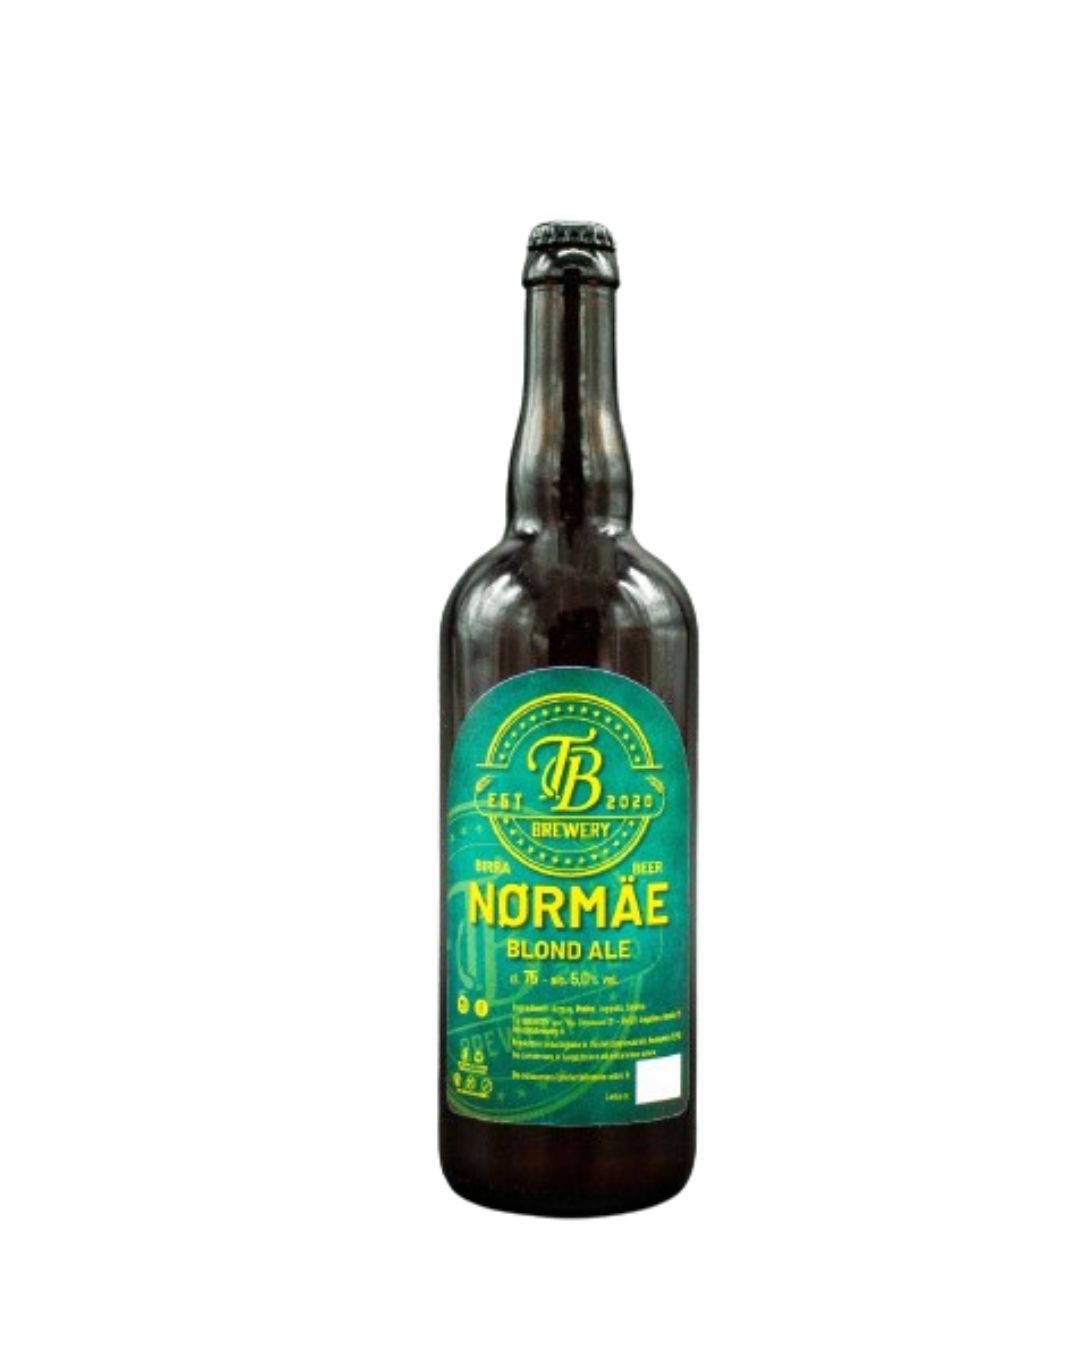 Nørmäe - Blond Ale Vol. 5% - TB Brewery